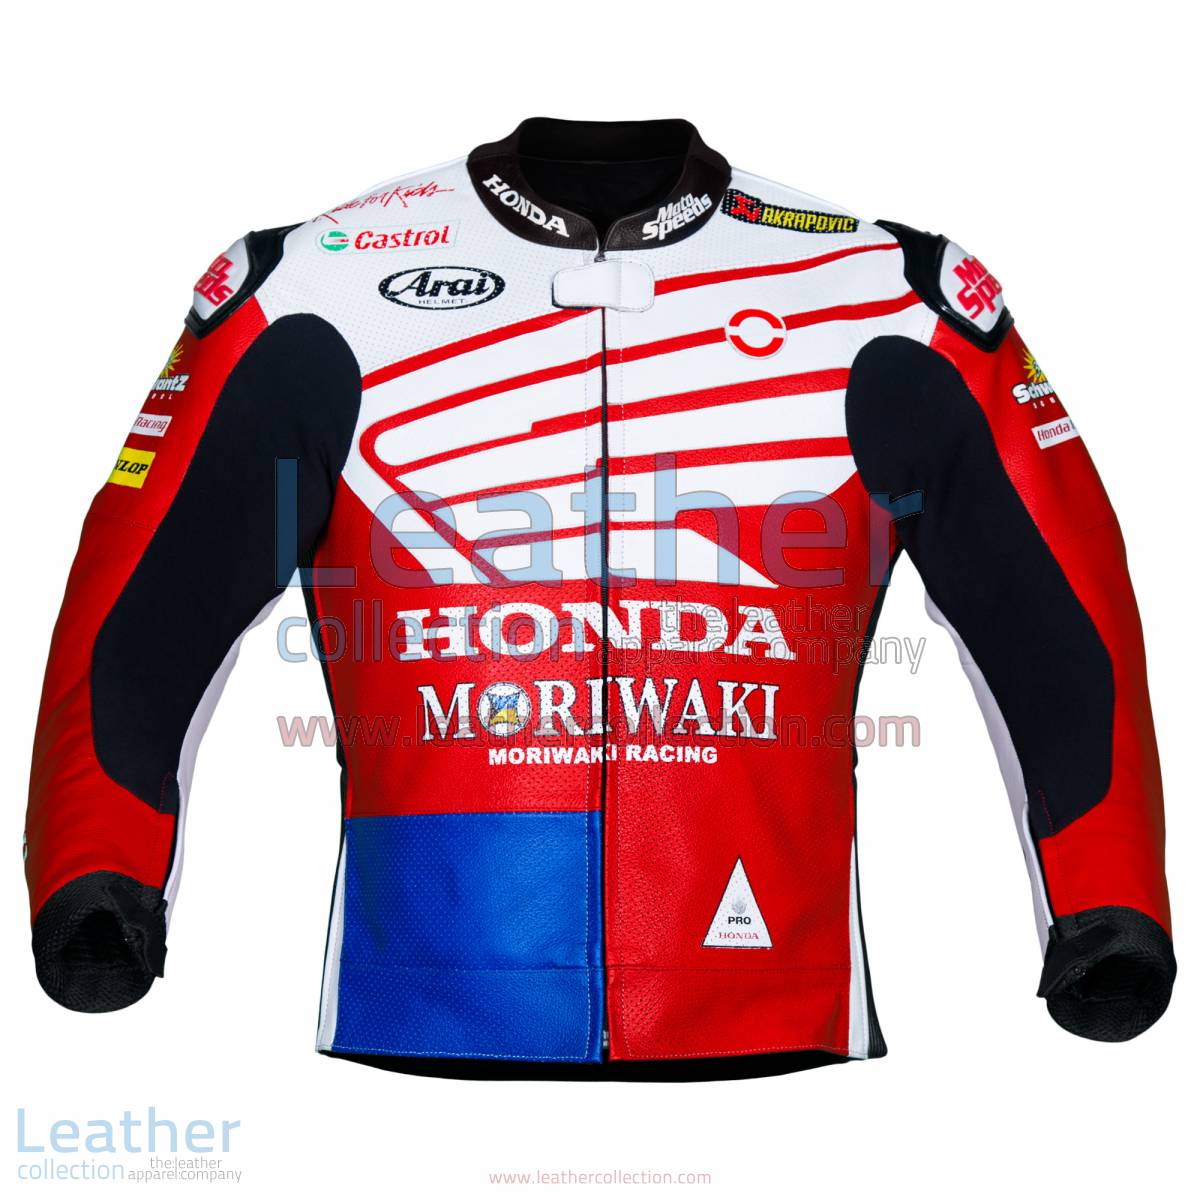 American Honda Moriwaki MD600 Motorcycle Jacket | Motorcycle Jacket,Honda motorcycle jacket